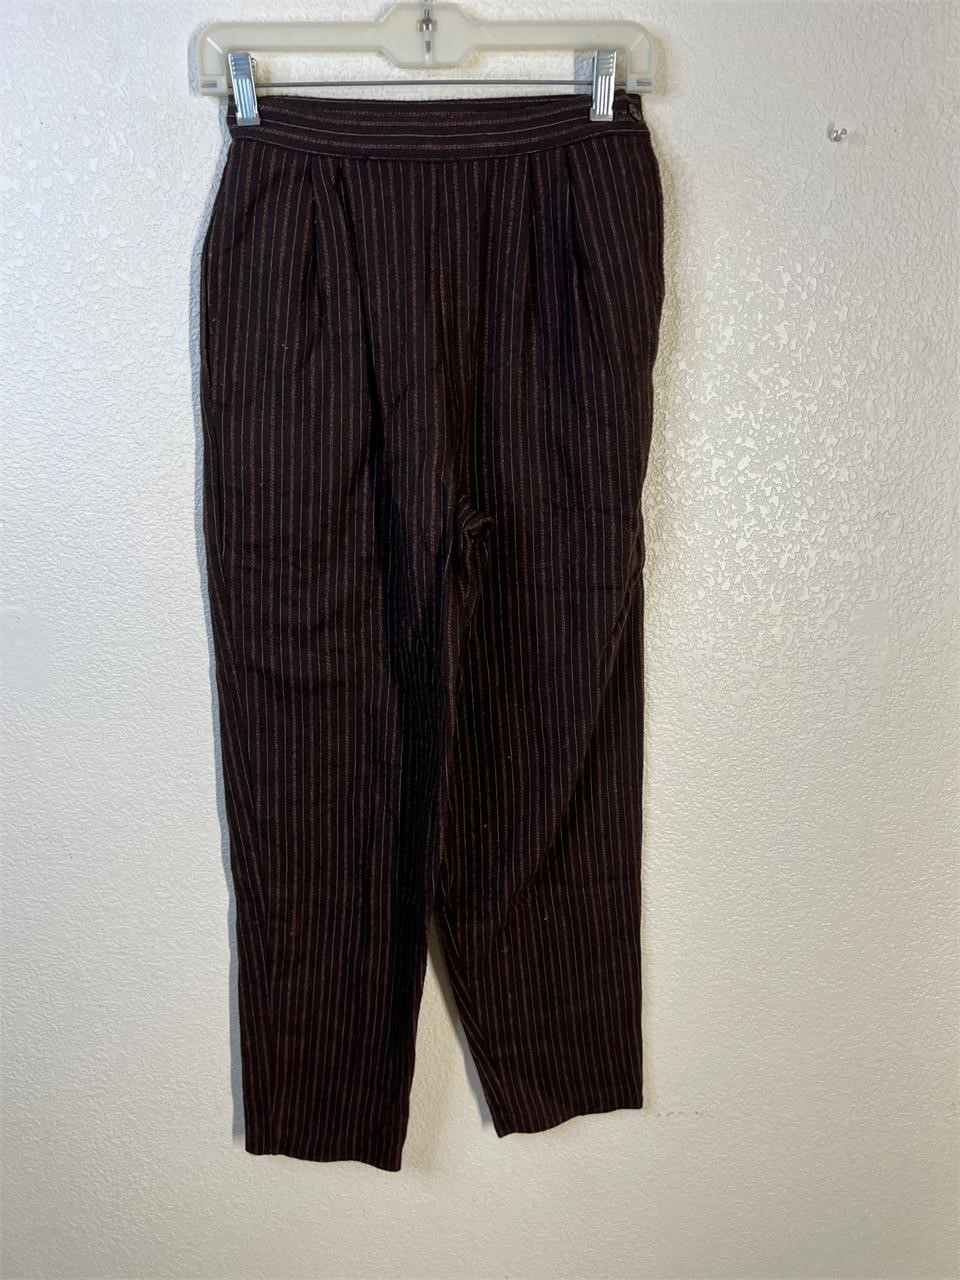 Vintage Discovery Striped Knit Pants